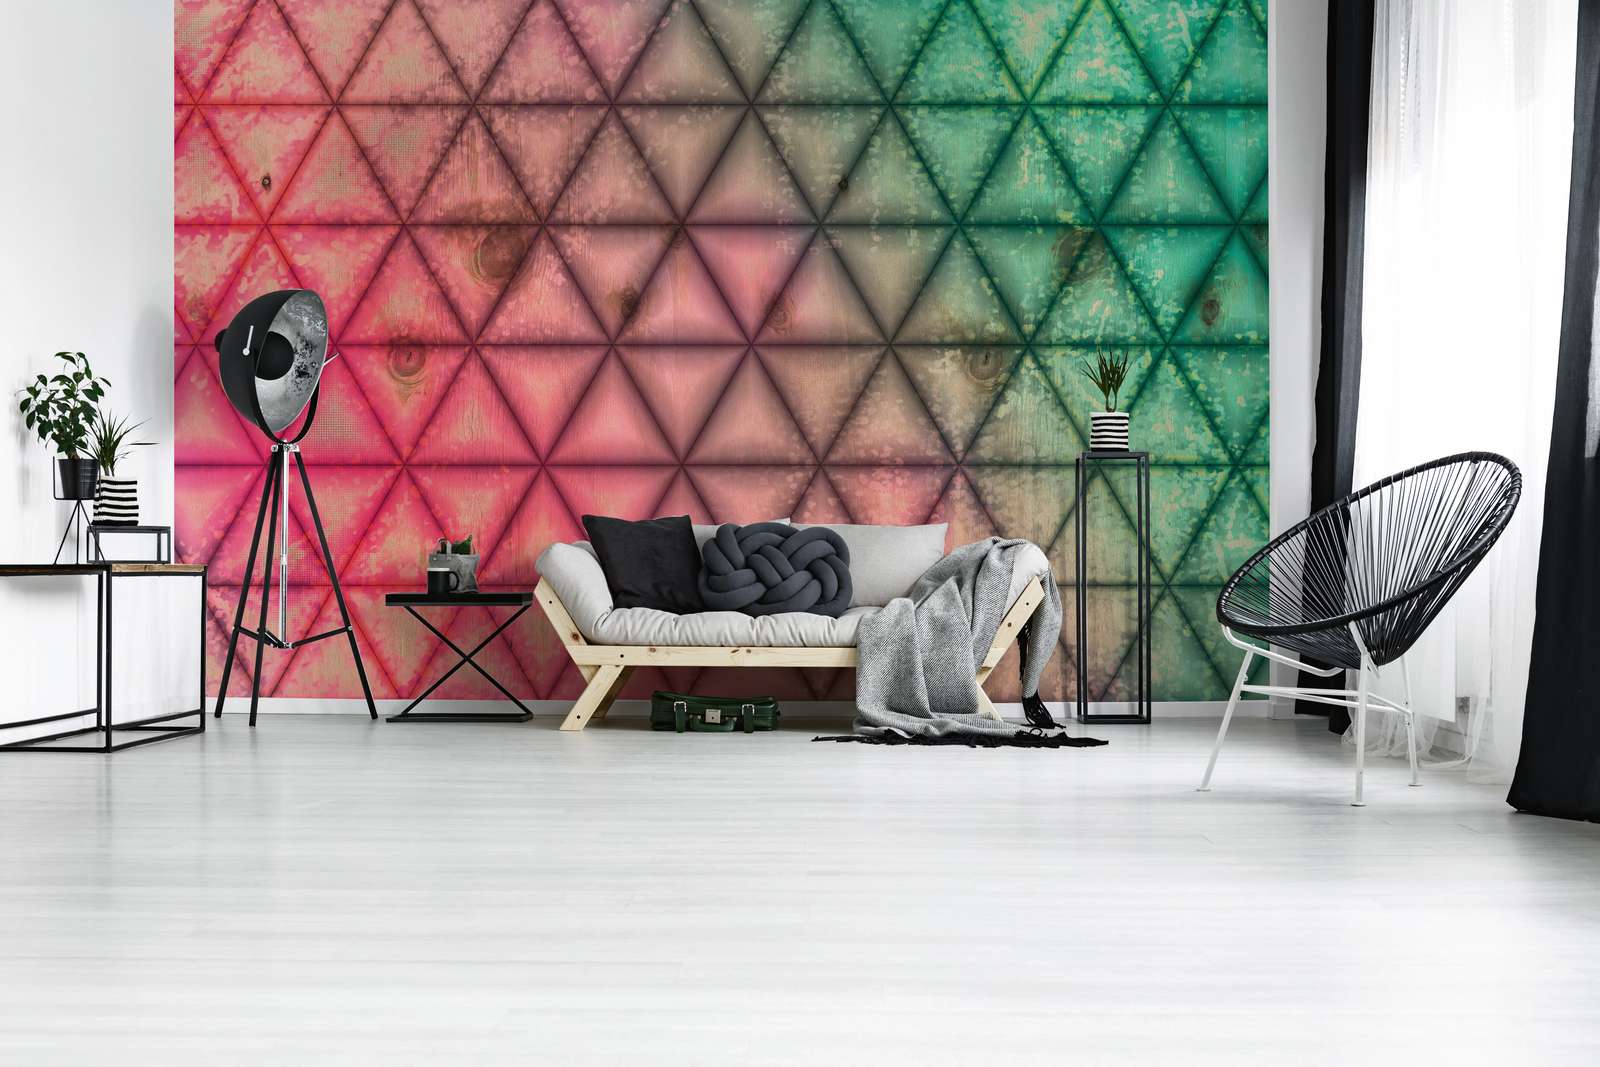             Fototapete geometrisches Dreiecks Muster in Holzoptik – Grün, Pink
        